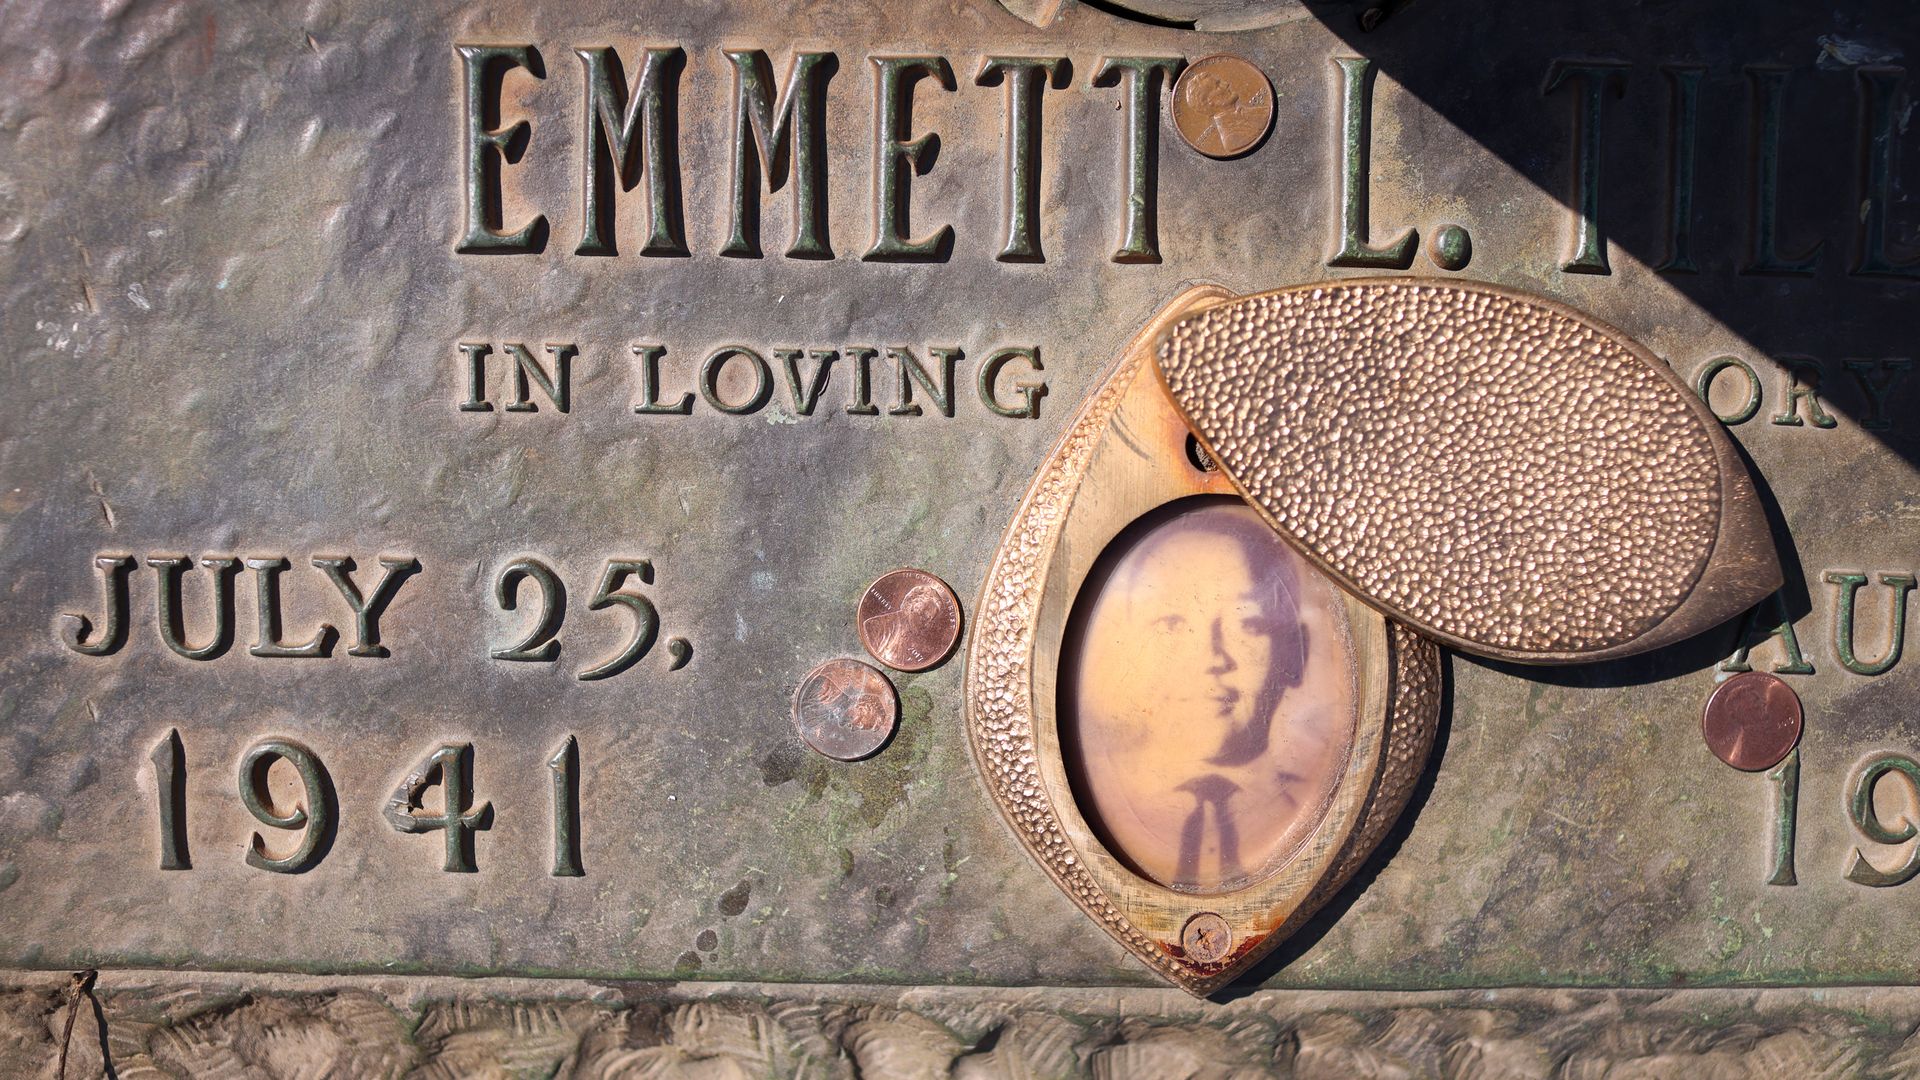 Photo of Emmett Till's tombstone